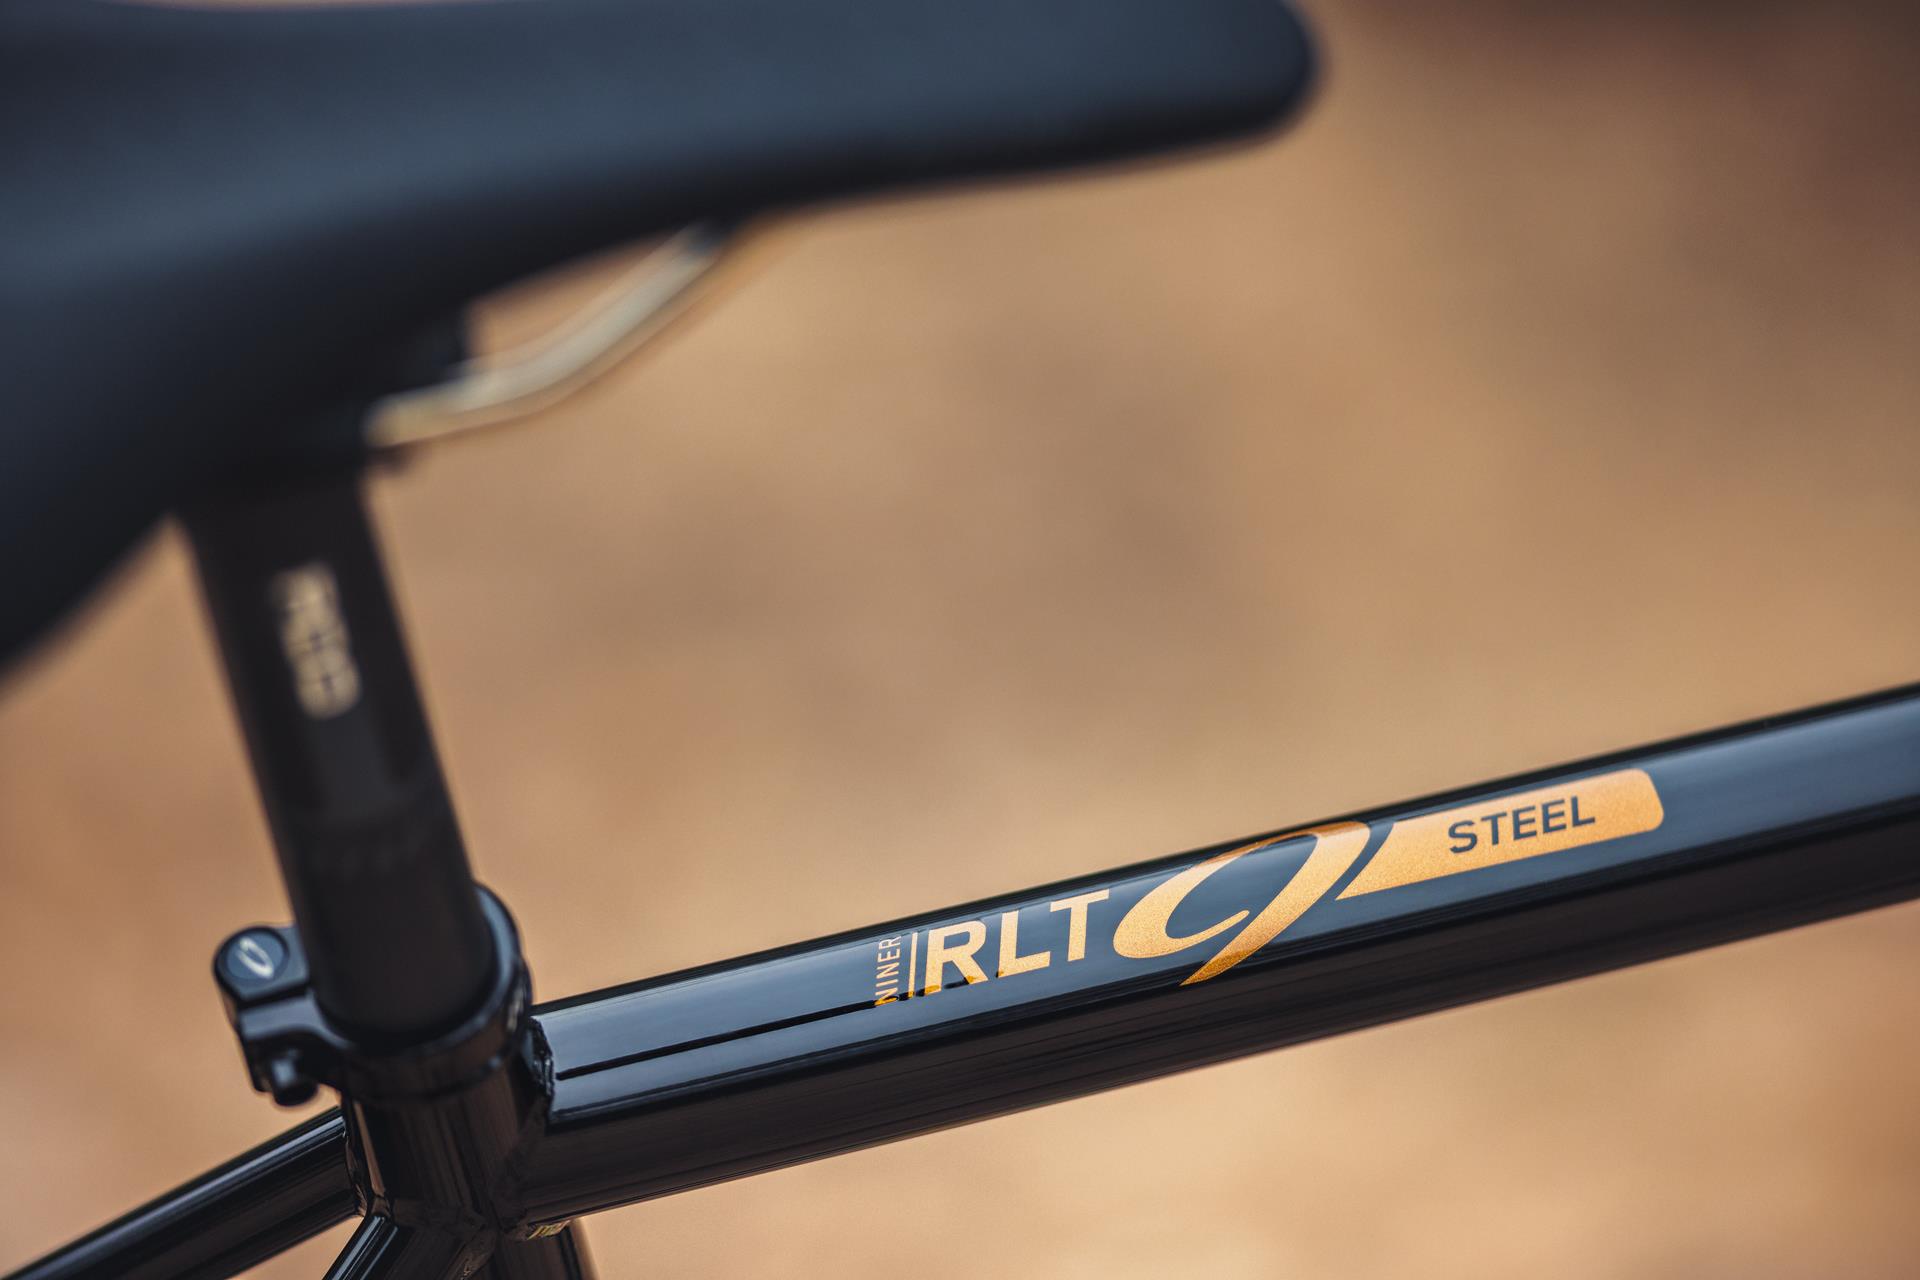 Niner RLT Steel 2-Star Велосипед, изумрудно-зеленый, 59